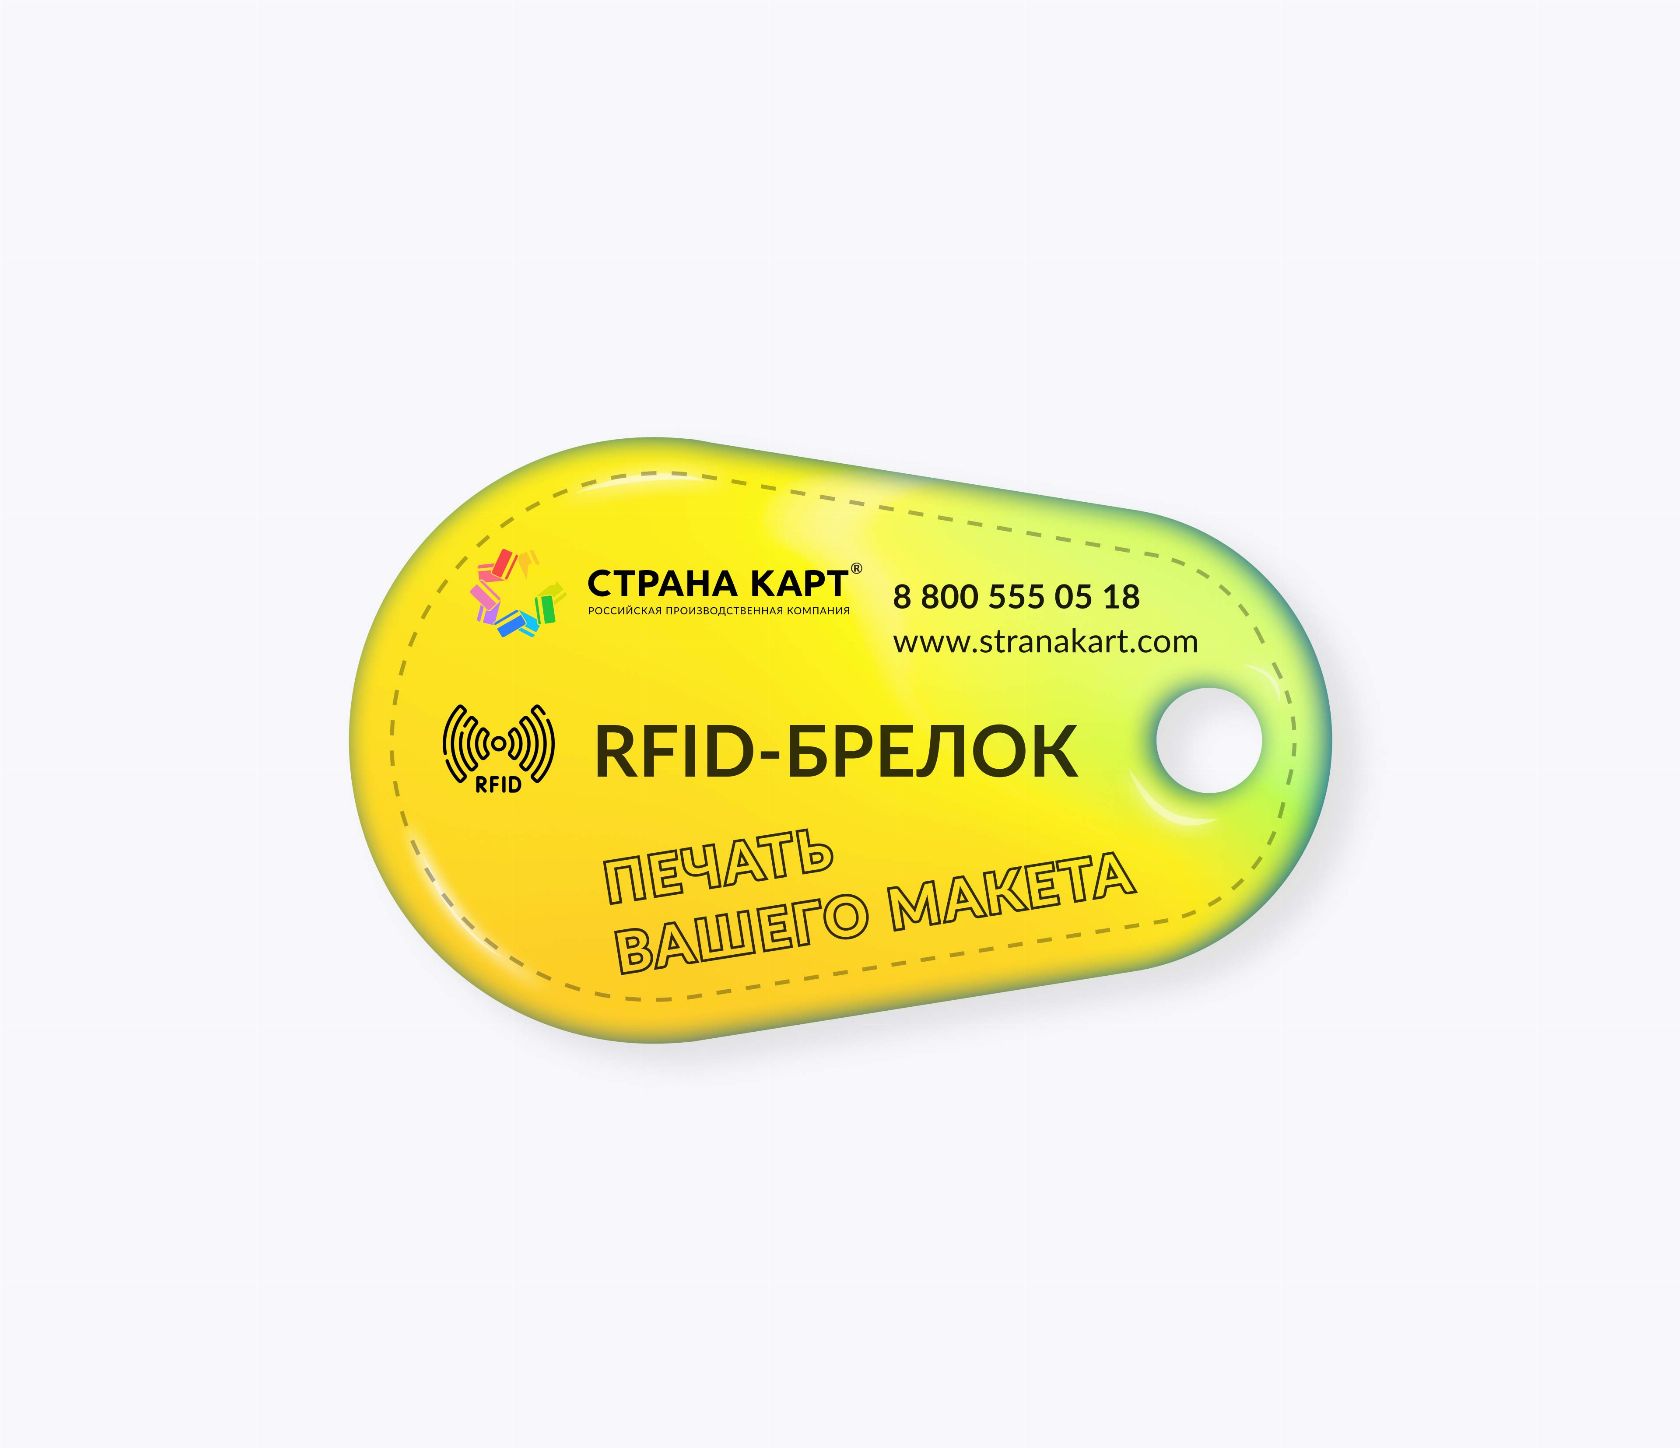 Каплевидные RFID-брелоки NEOKEY® с чипом EM-MARINE TK4100 RFID-брелоки NEOKEY® с чипом EM-MARINE TK4100 и вашим логотипом